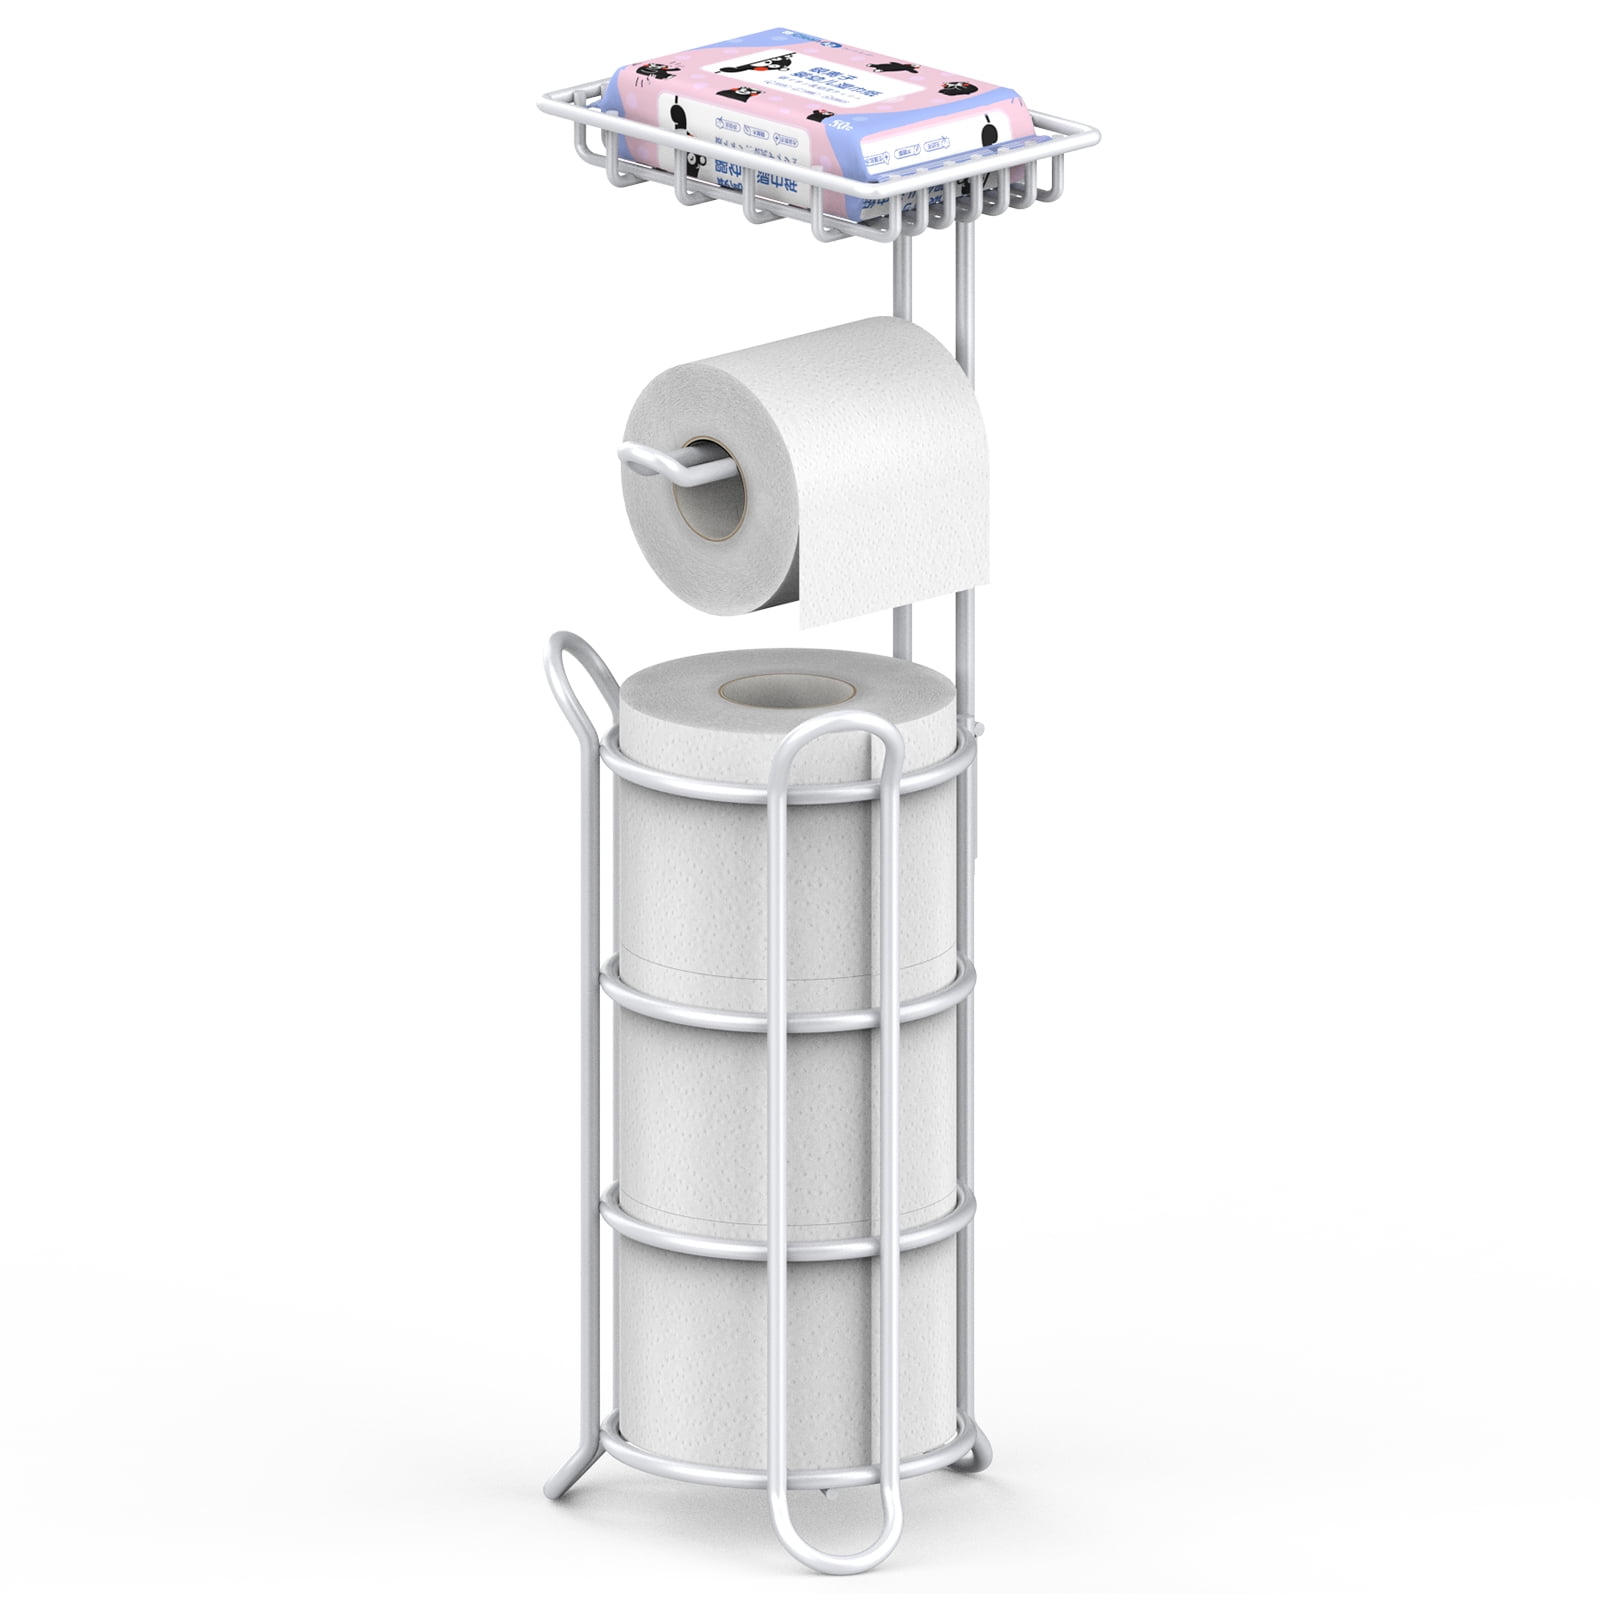 Unique Home Gifts - Toilet Paper Holder - Steelman